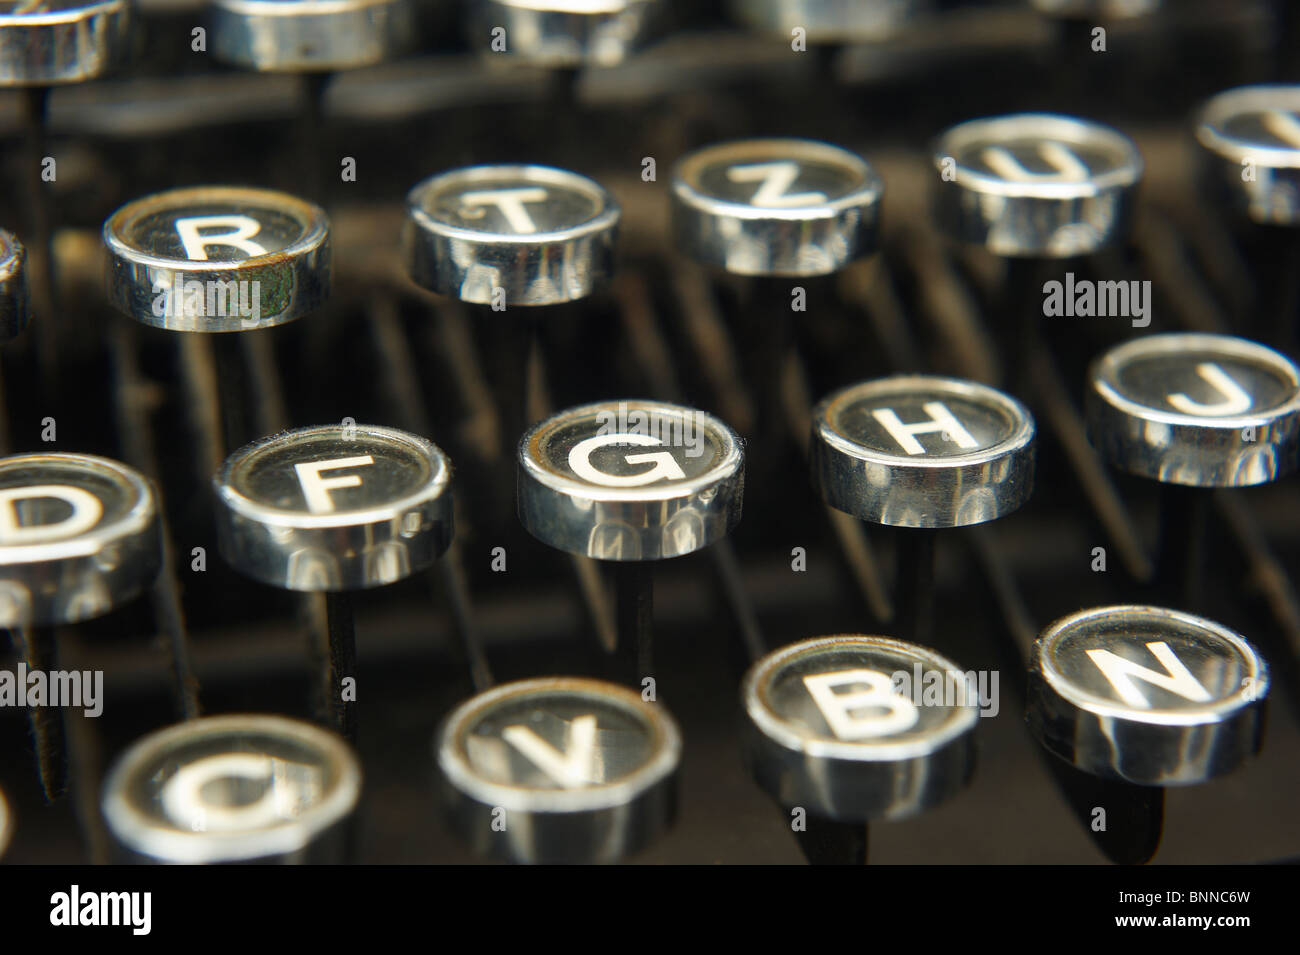 Closeup of a vintage typewriter Stock Photo